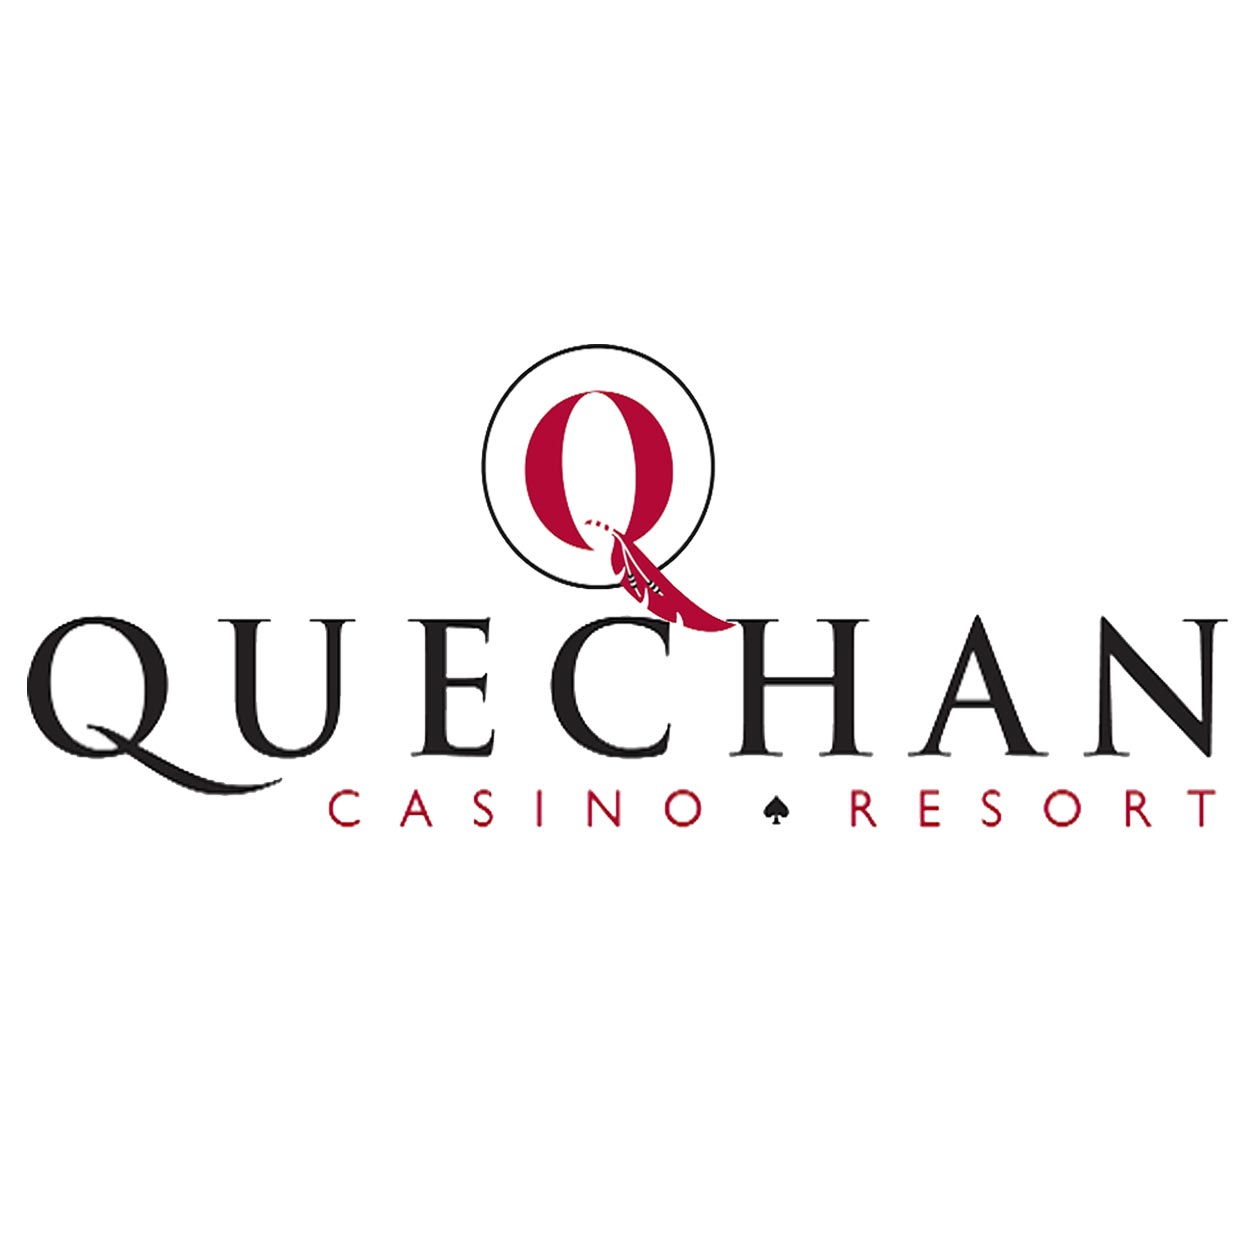 Quechan Casino and Resort